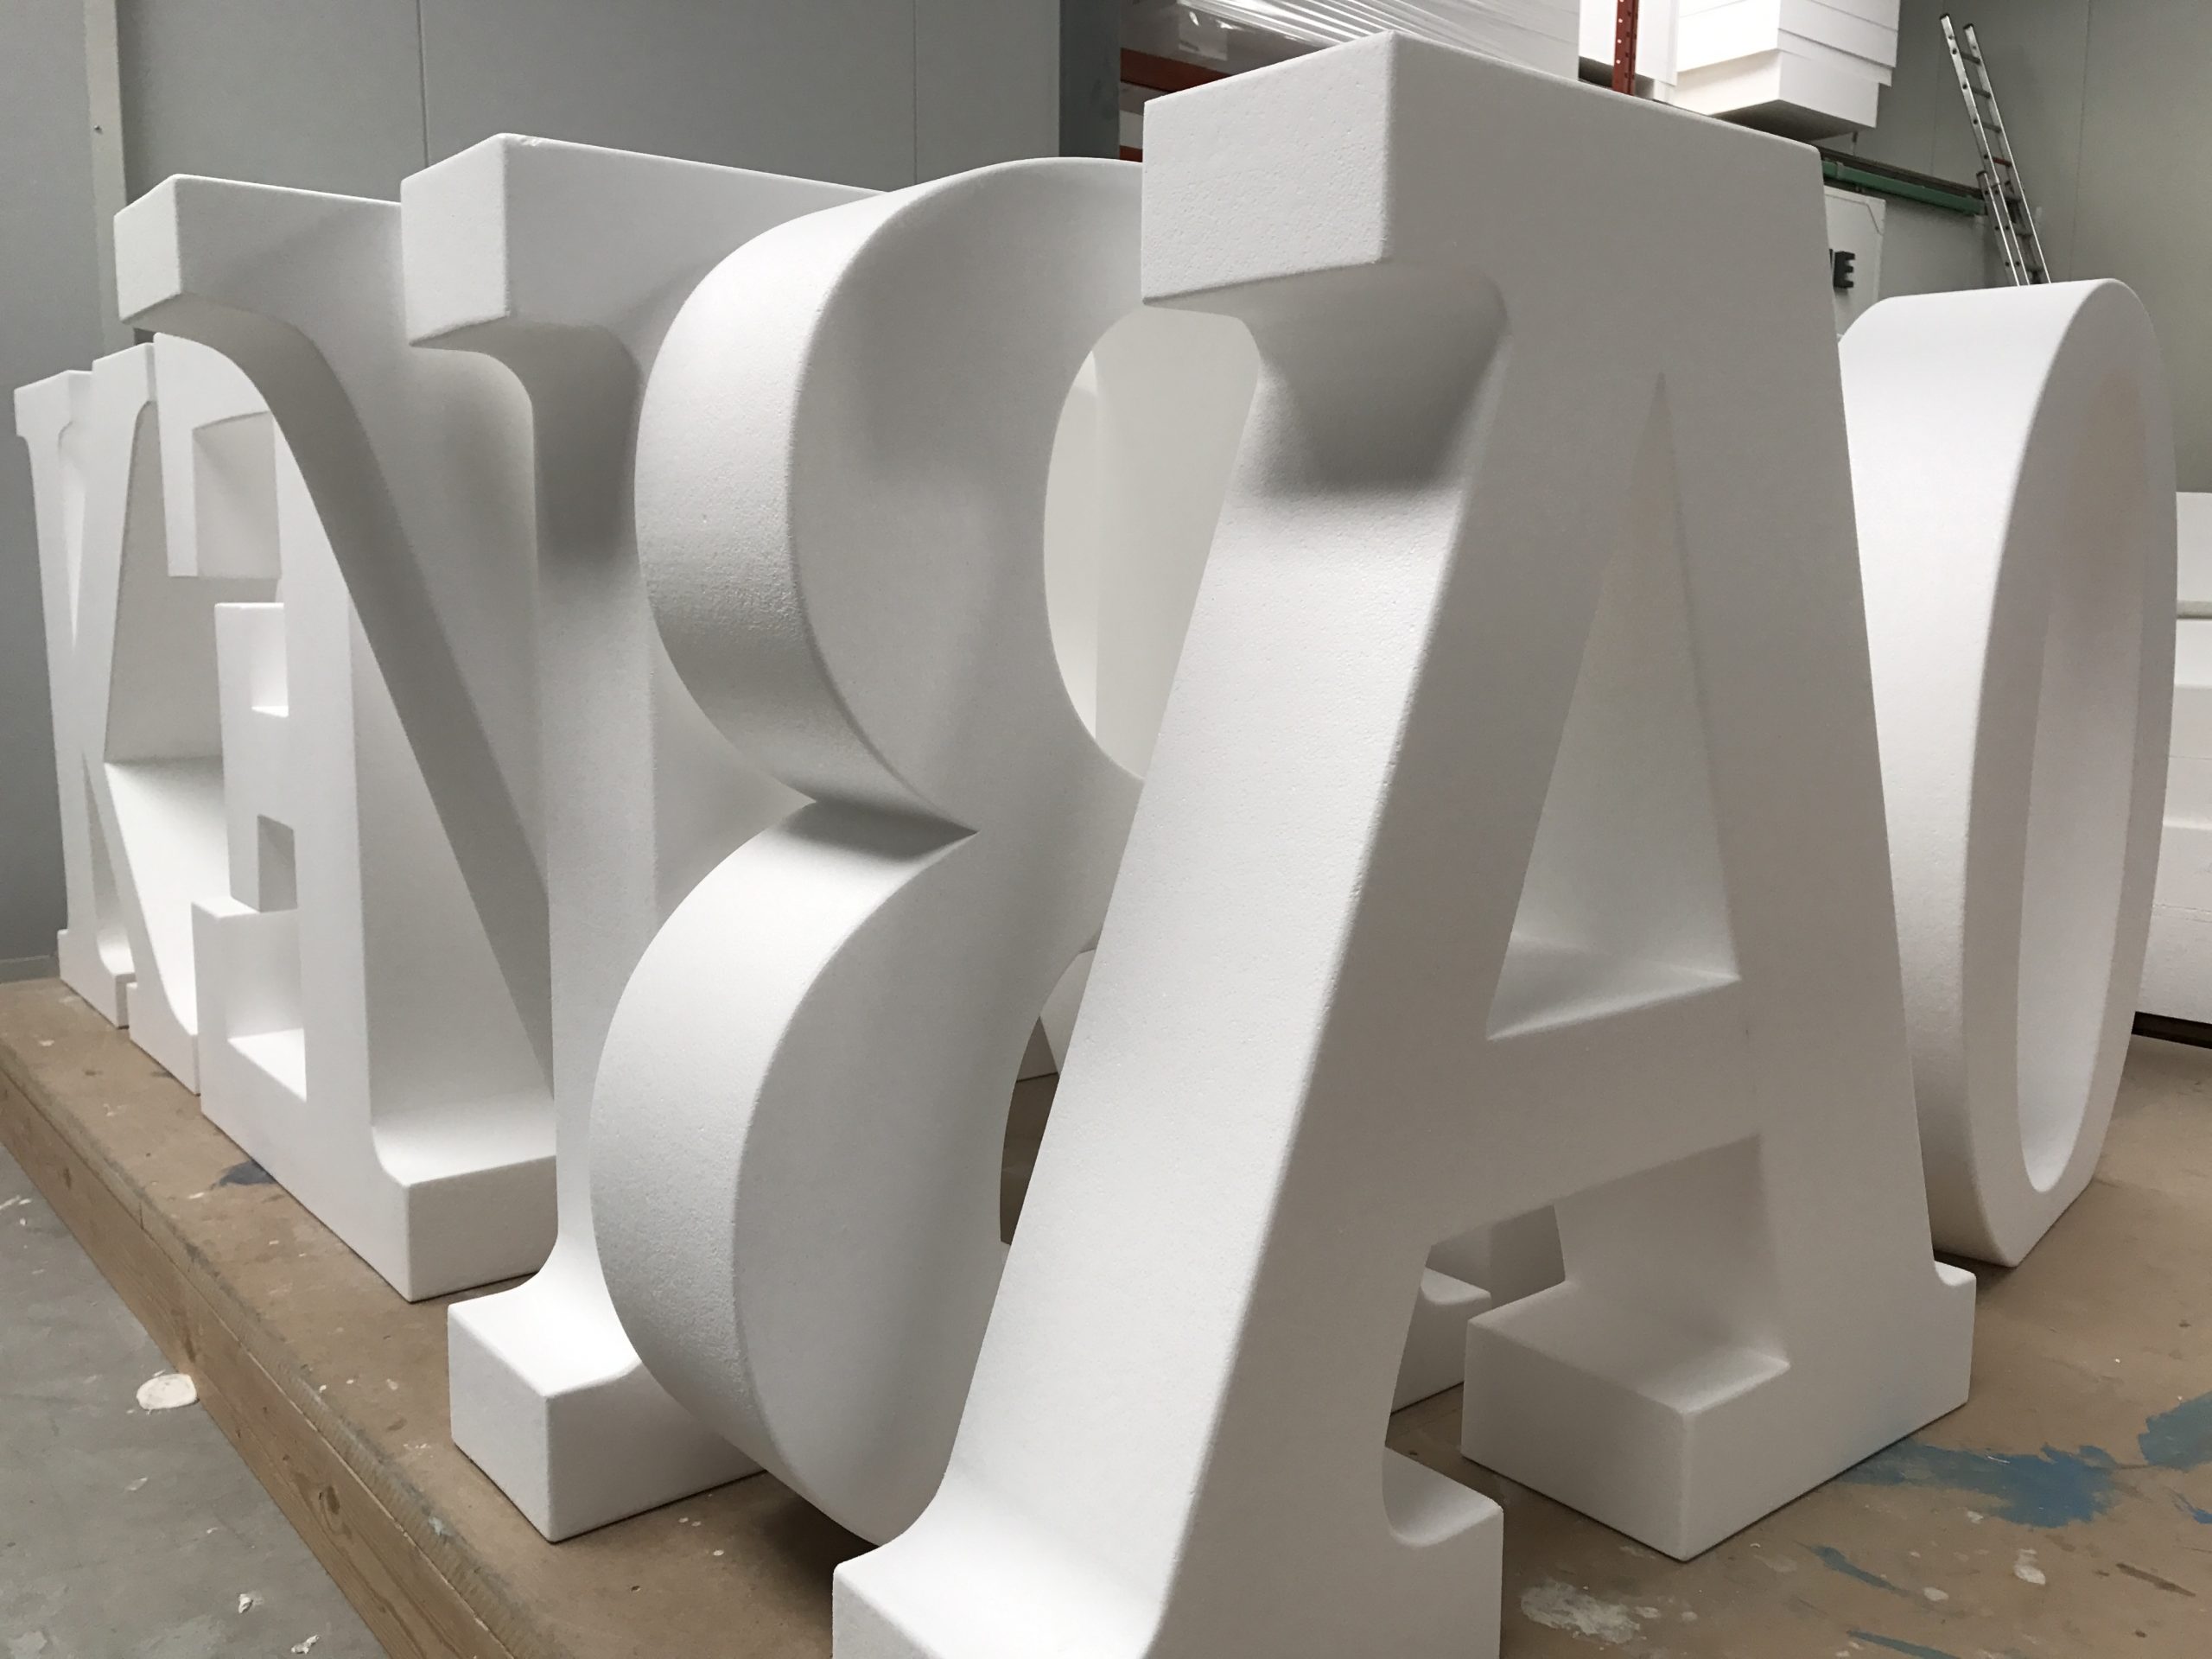 Grote 3D kunststof letters